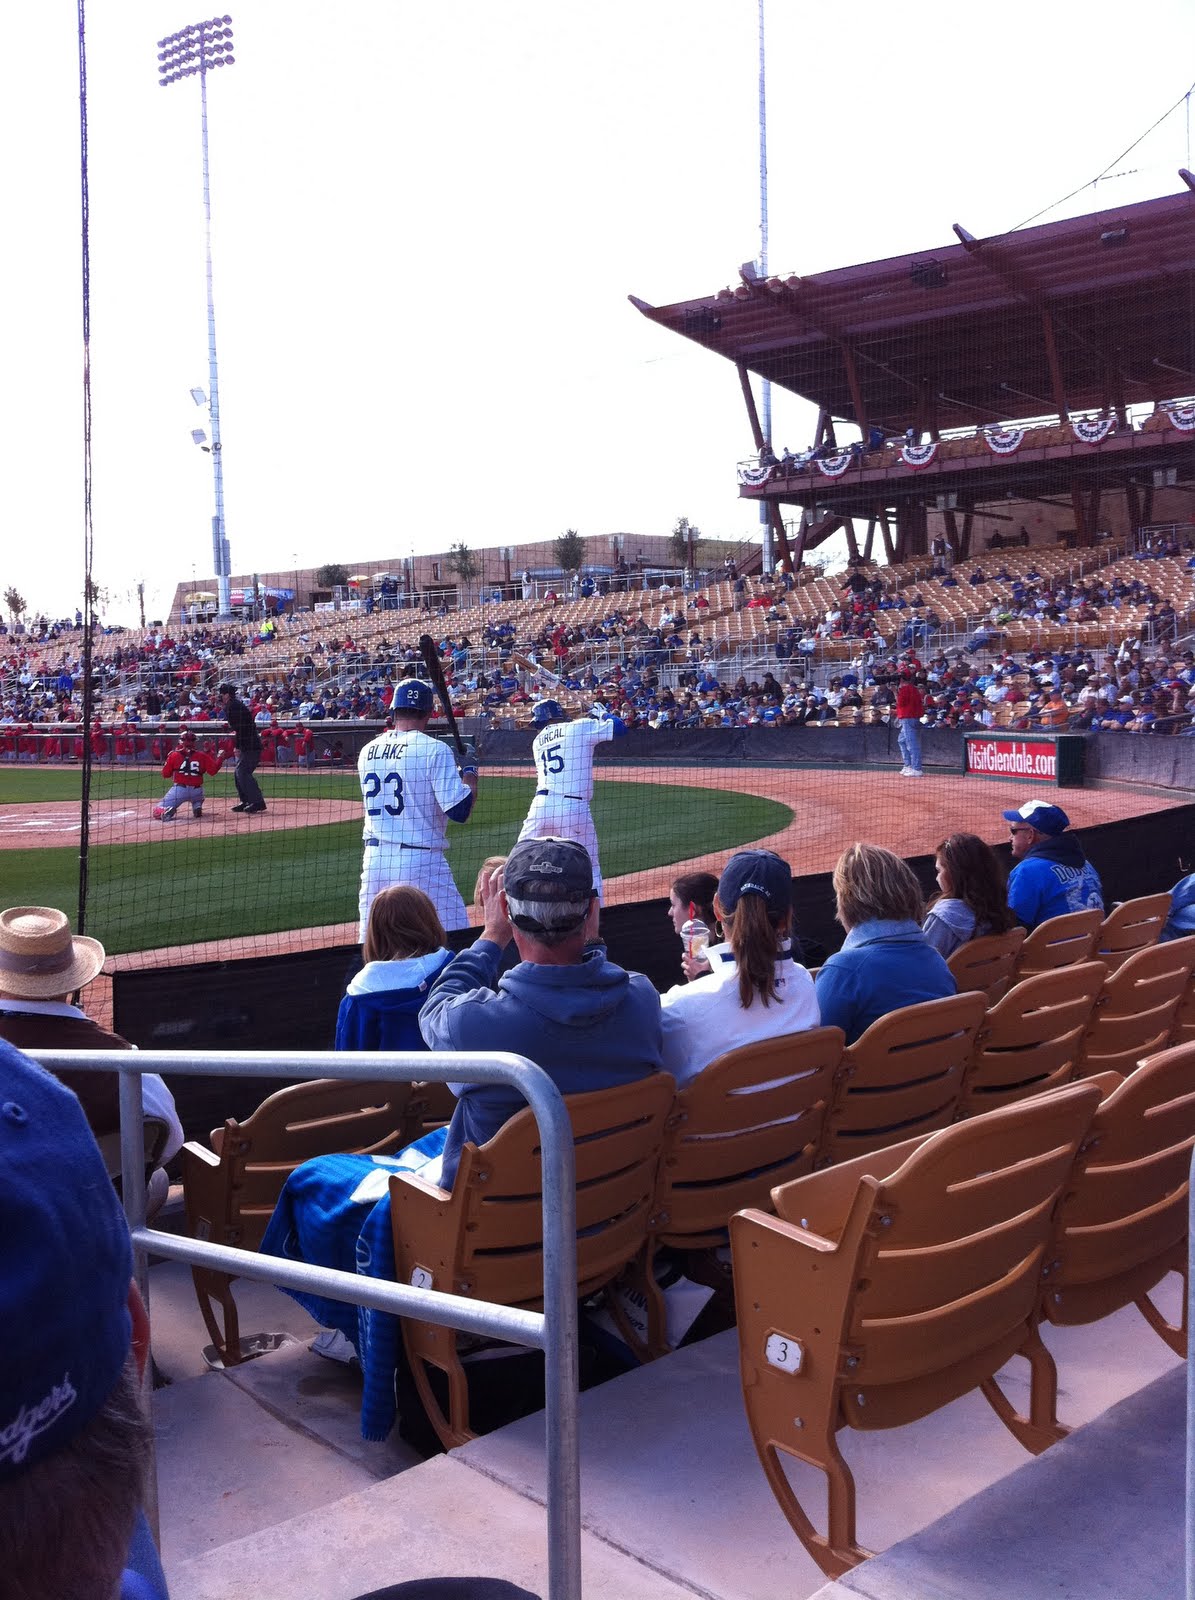 Introducing the Dodgers 2014 batting practice jerseys, by Jon Weisman